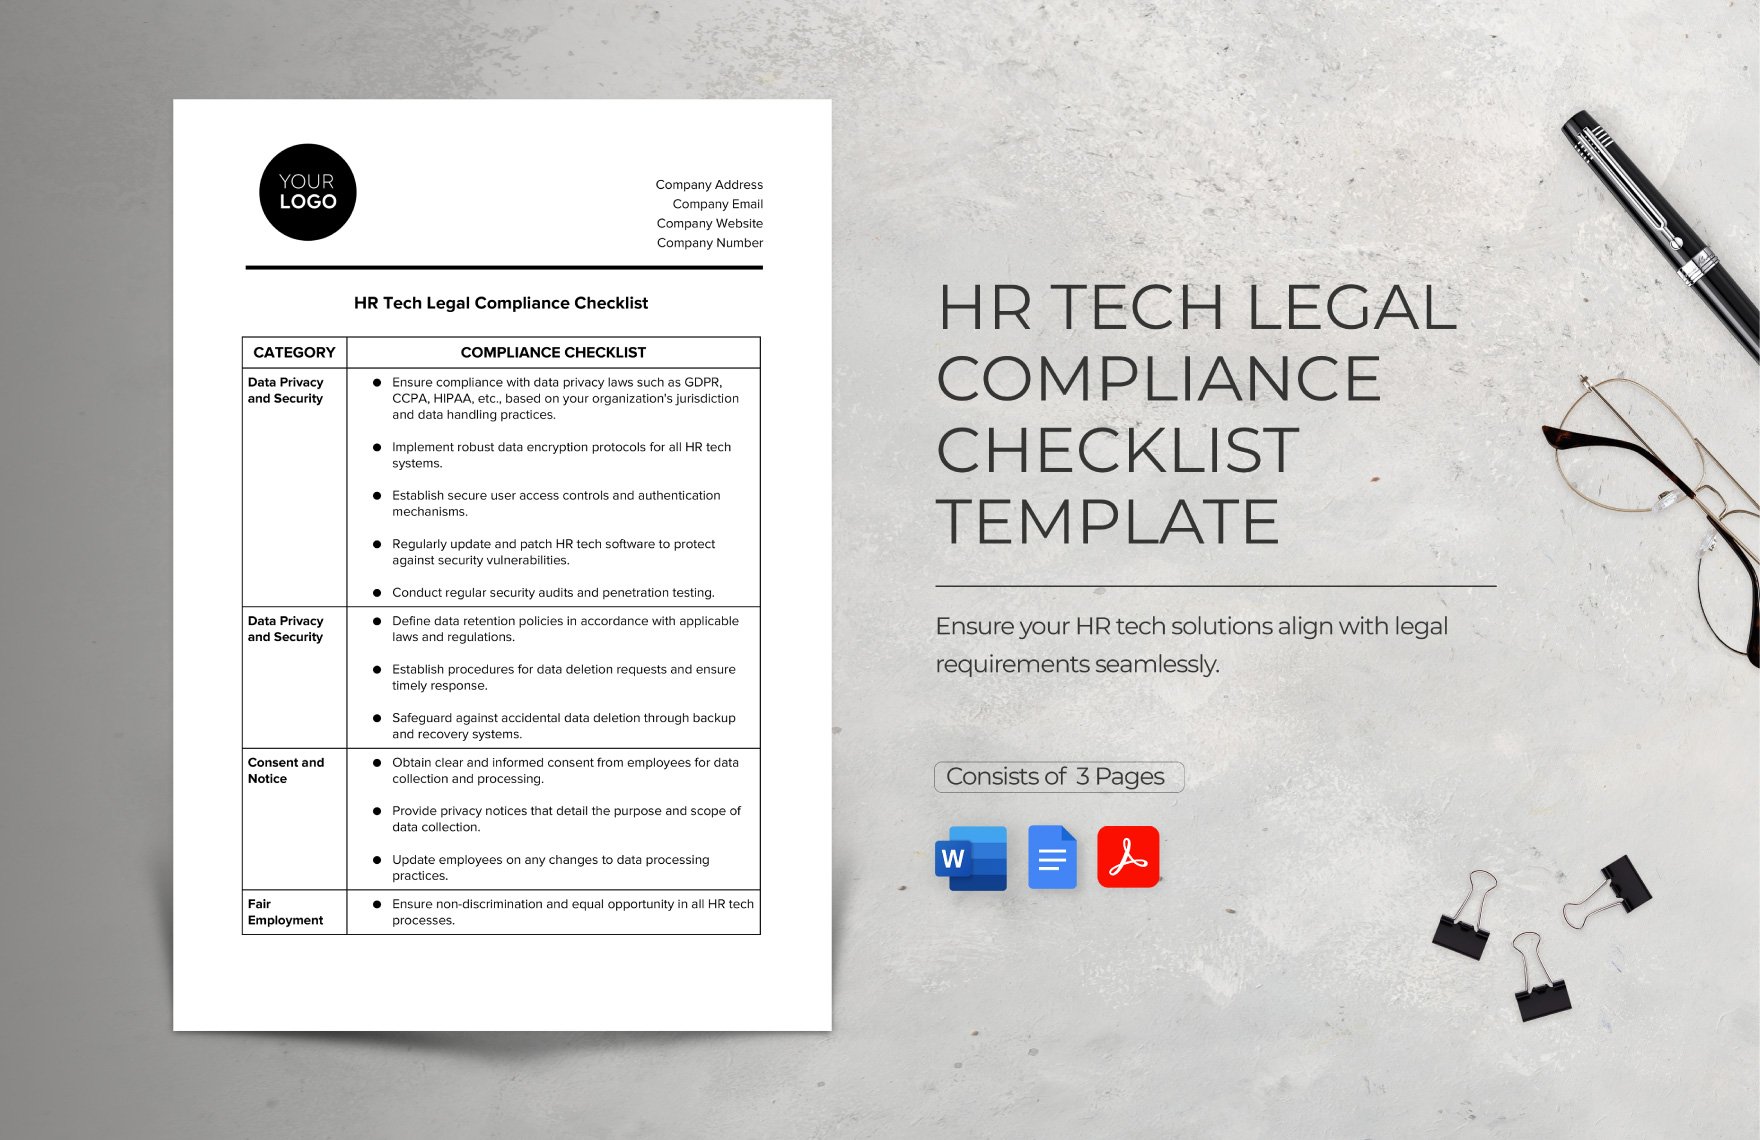 HR Tech Legal Compliance Checklist Template